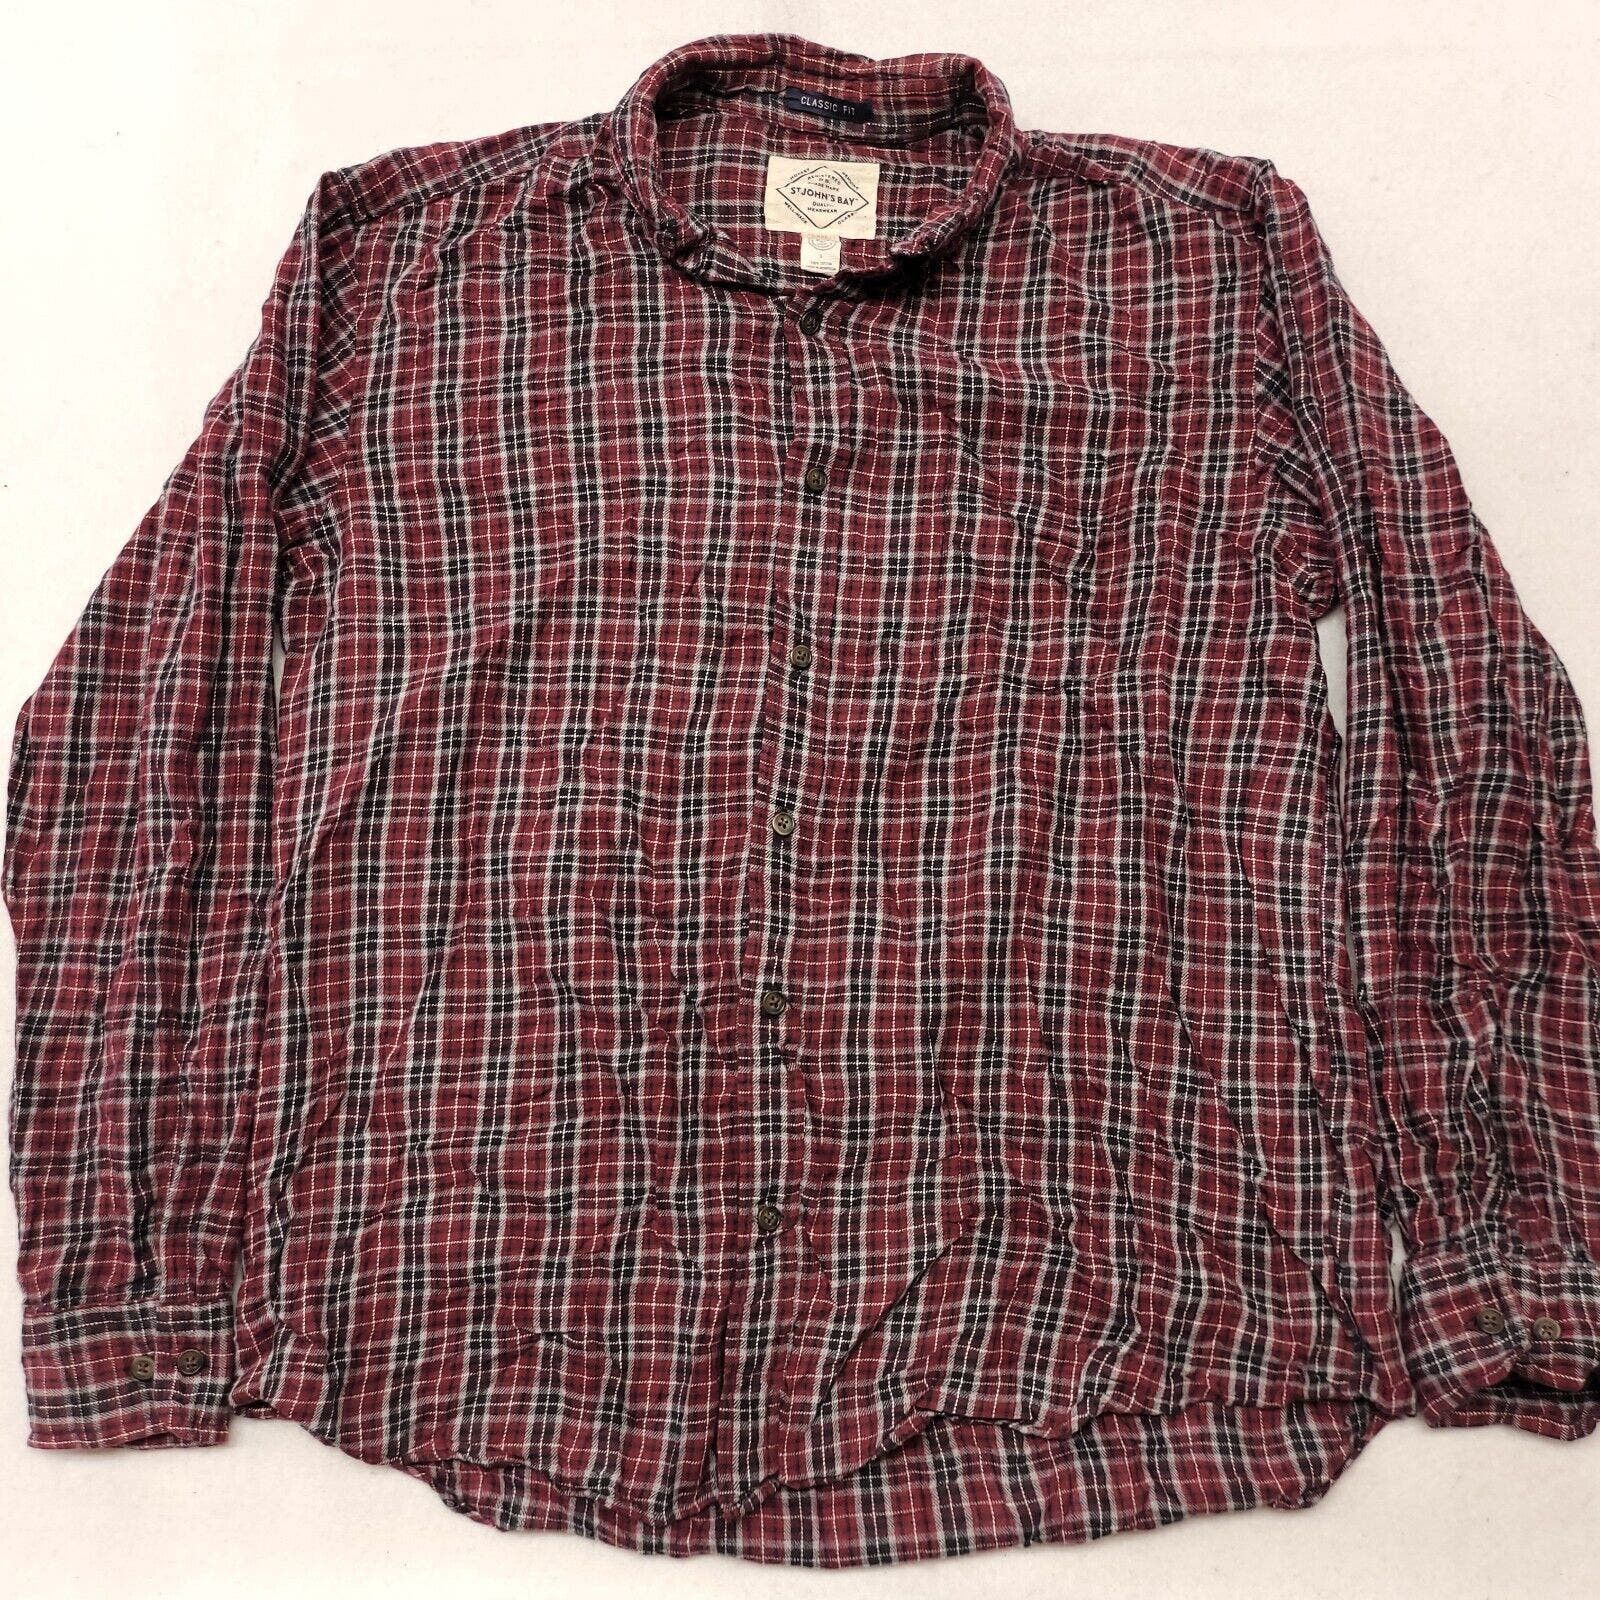 St. Johns Bay St Johns Bay Tartan Flannel Shirt Mens Size Large Red Black Size US L / EU 52-54 / 3 - 2 Preview